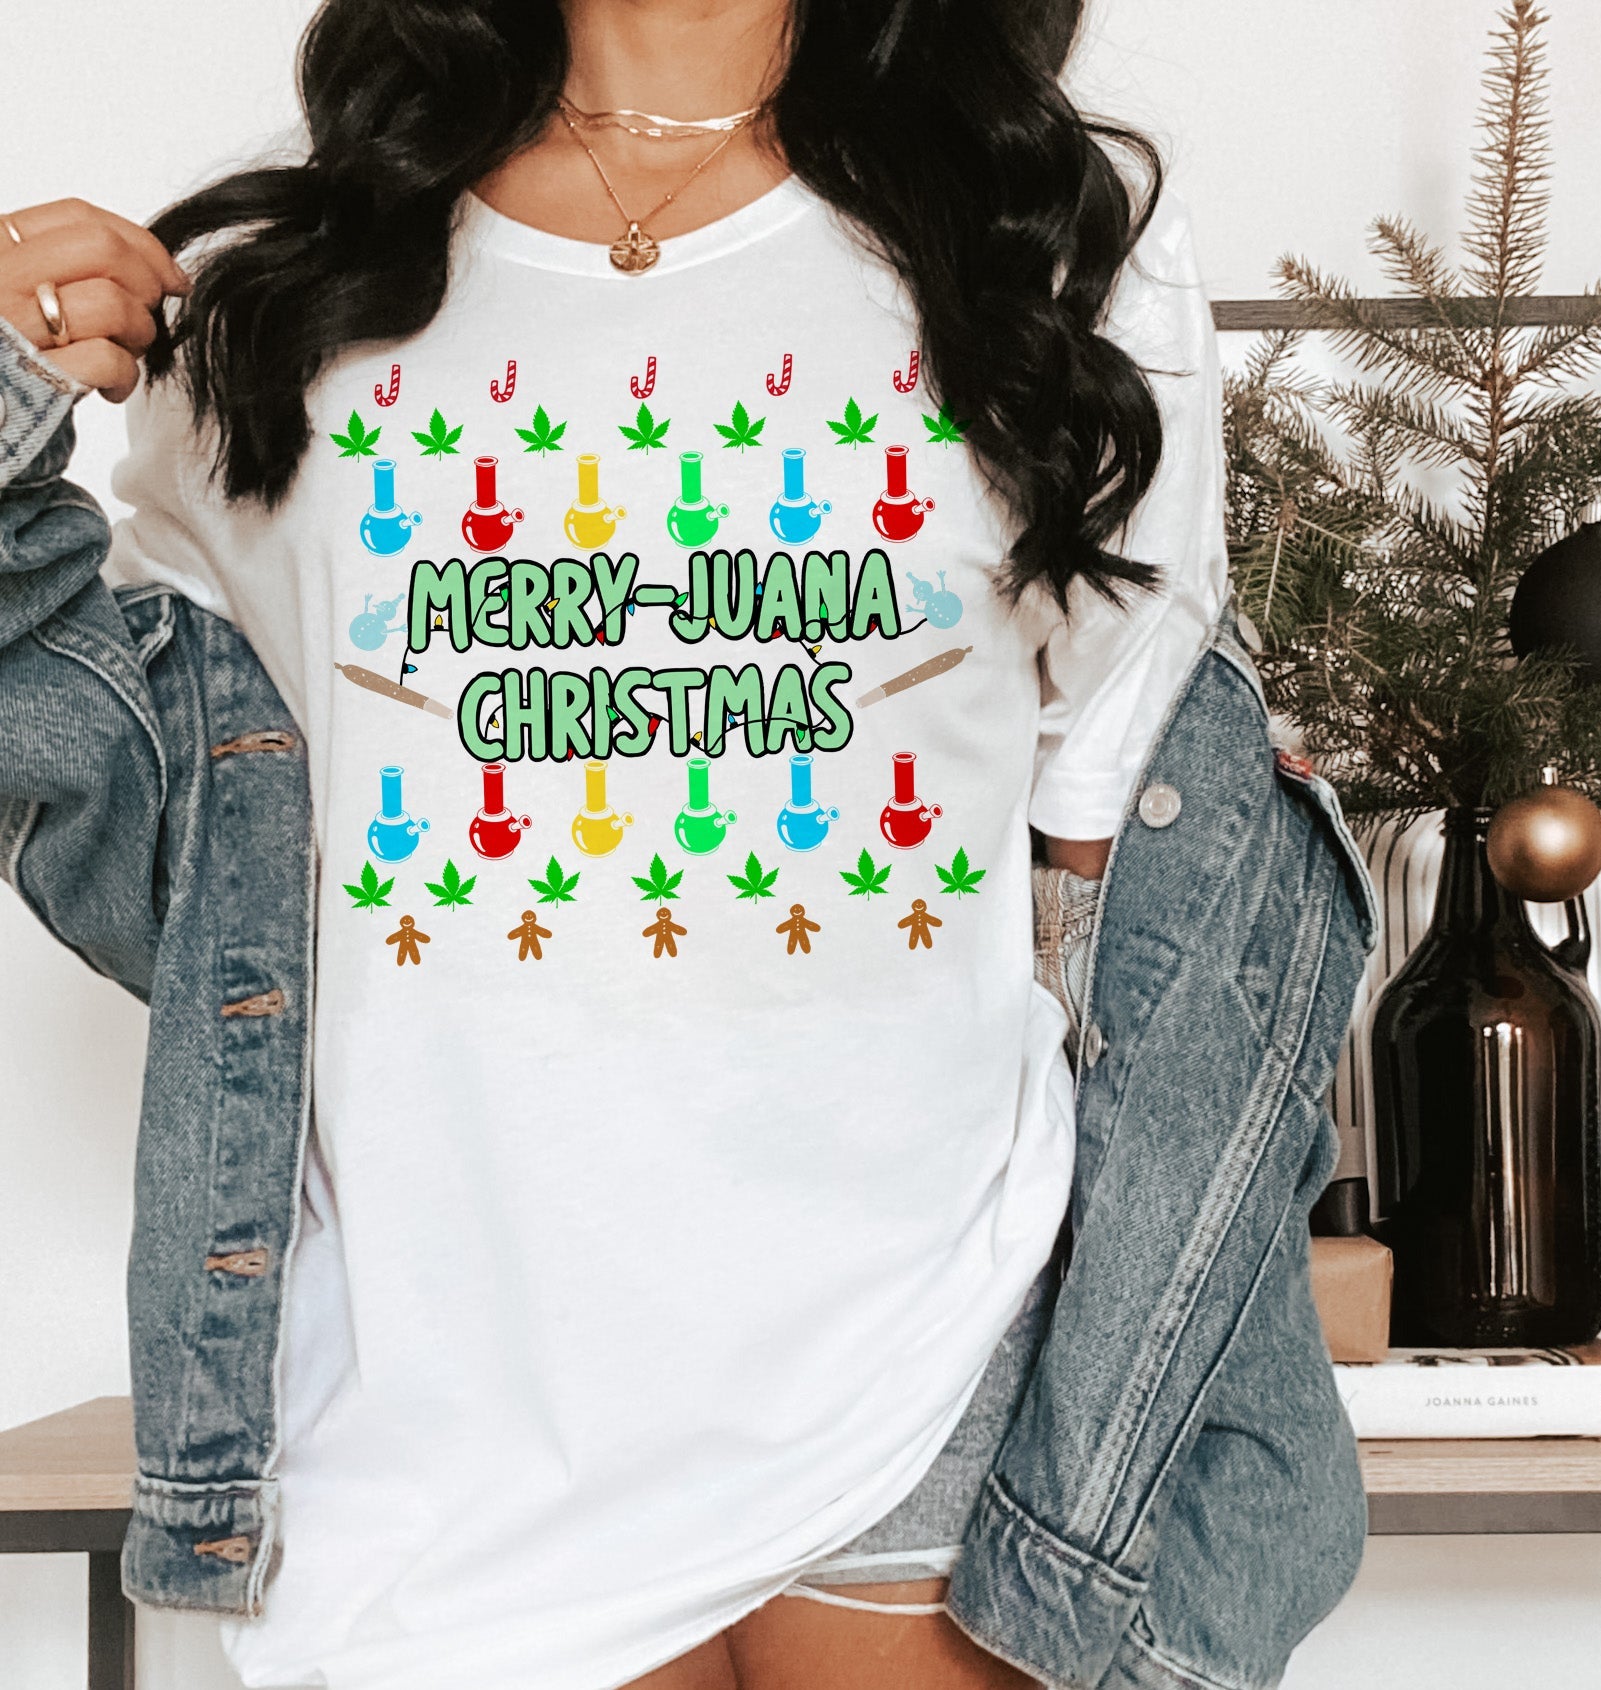 stoner christmas party shirt - HighCiti